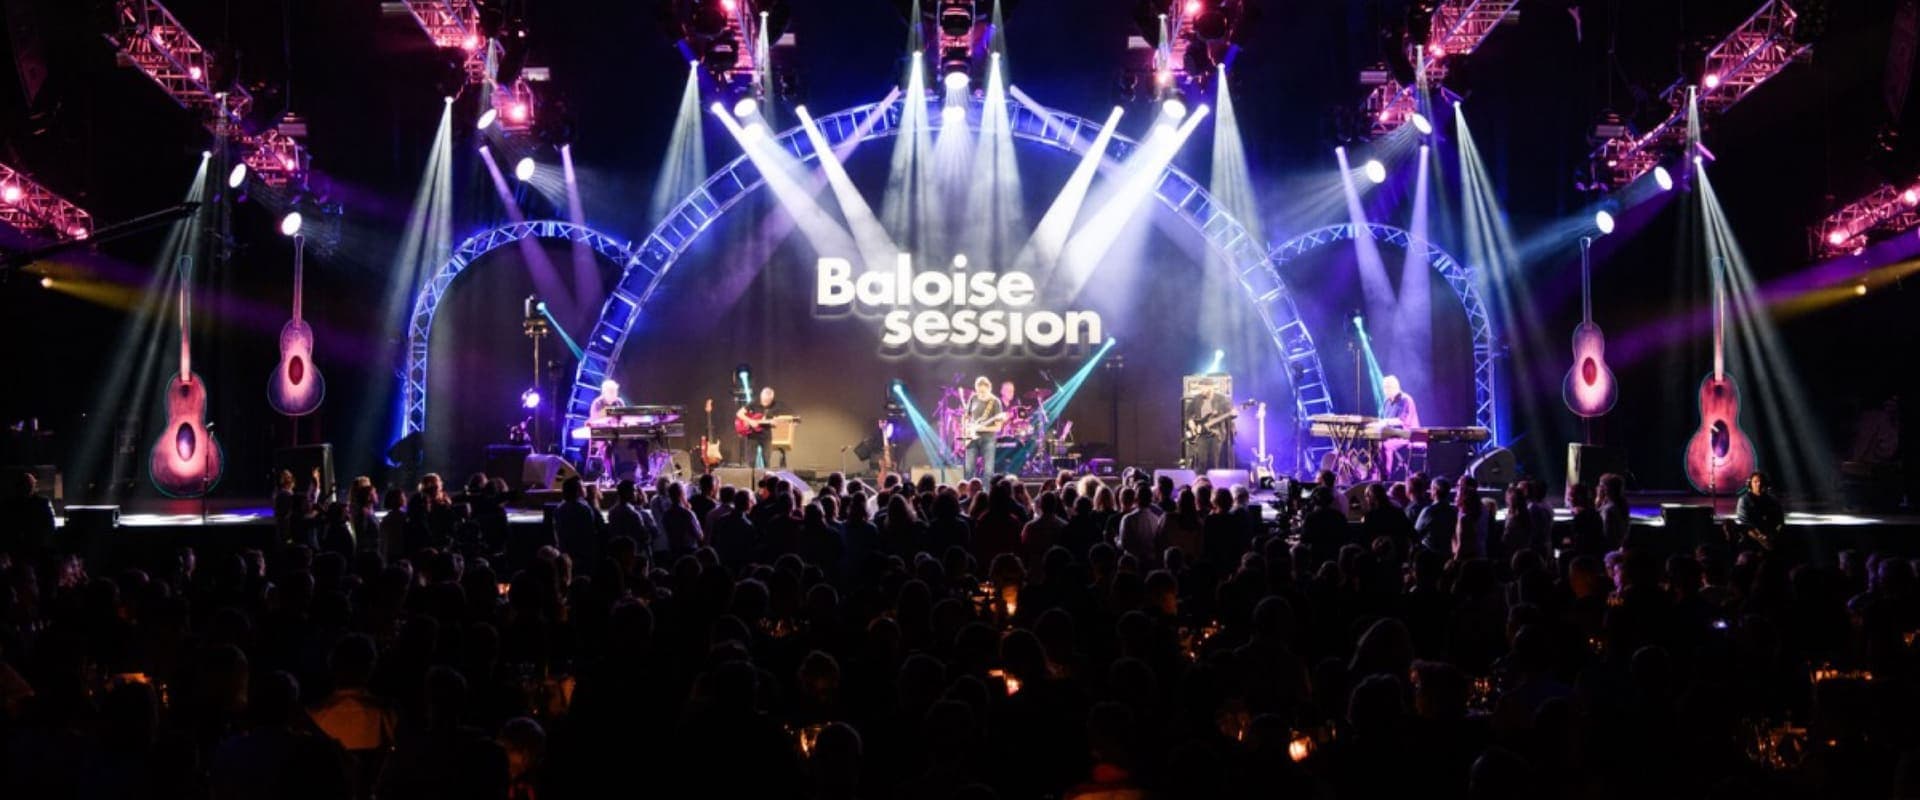 Chris Rea: Live at Baloise session 2017